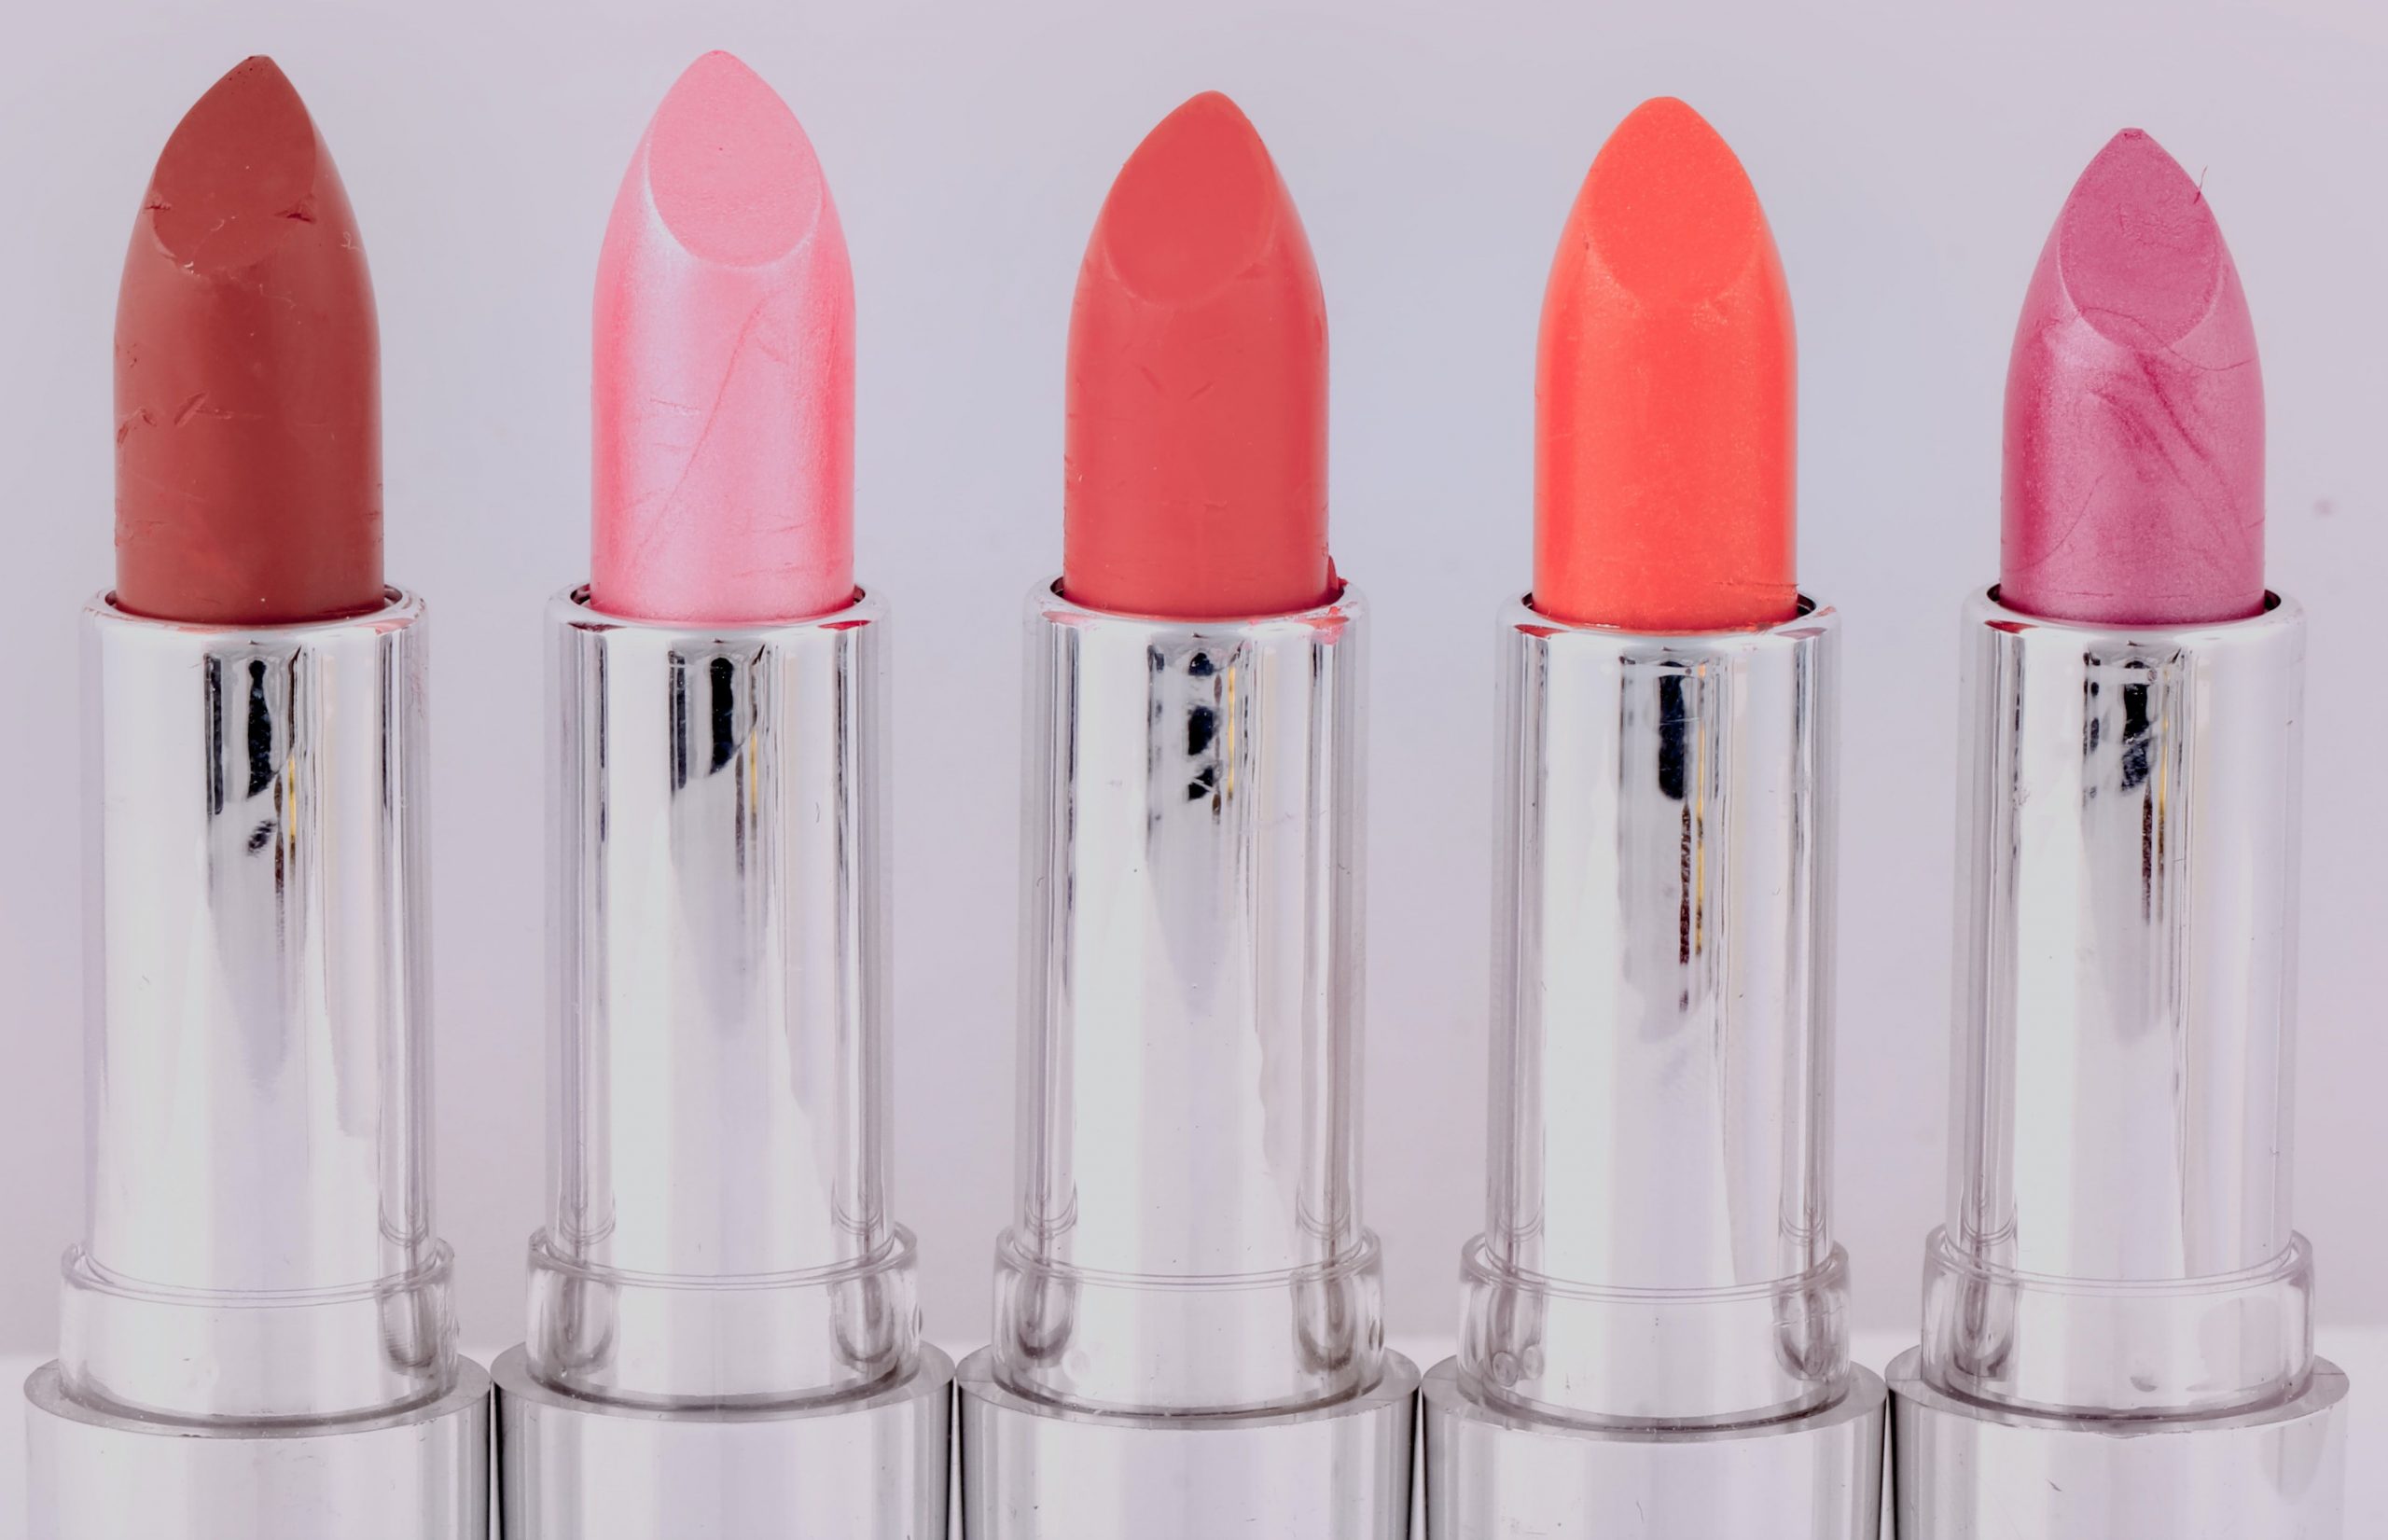 Lipsticks to enhance your makeup looks